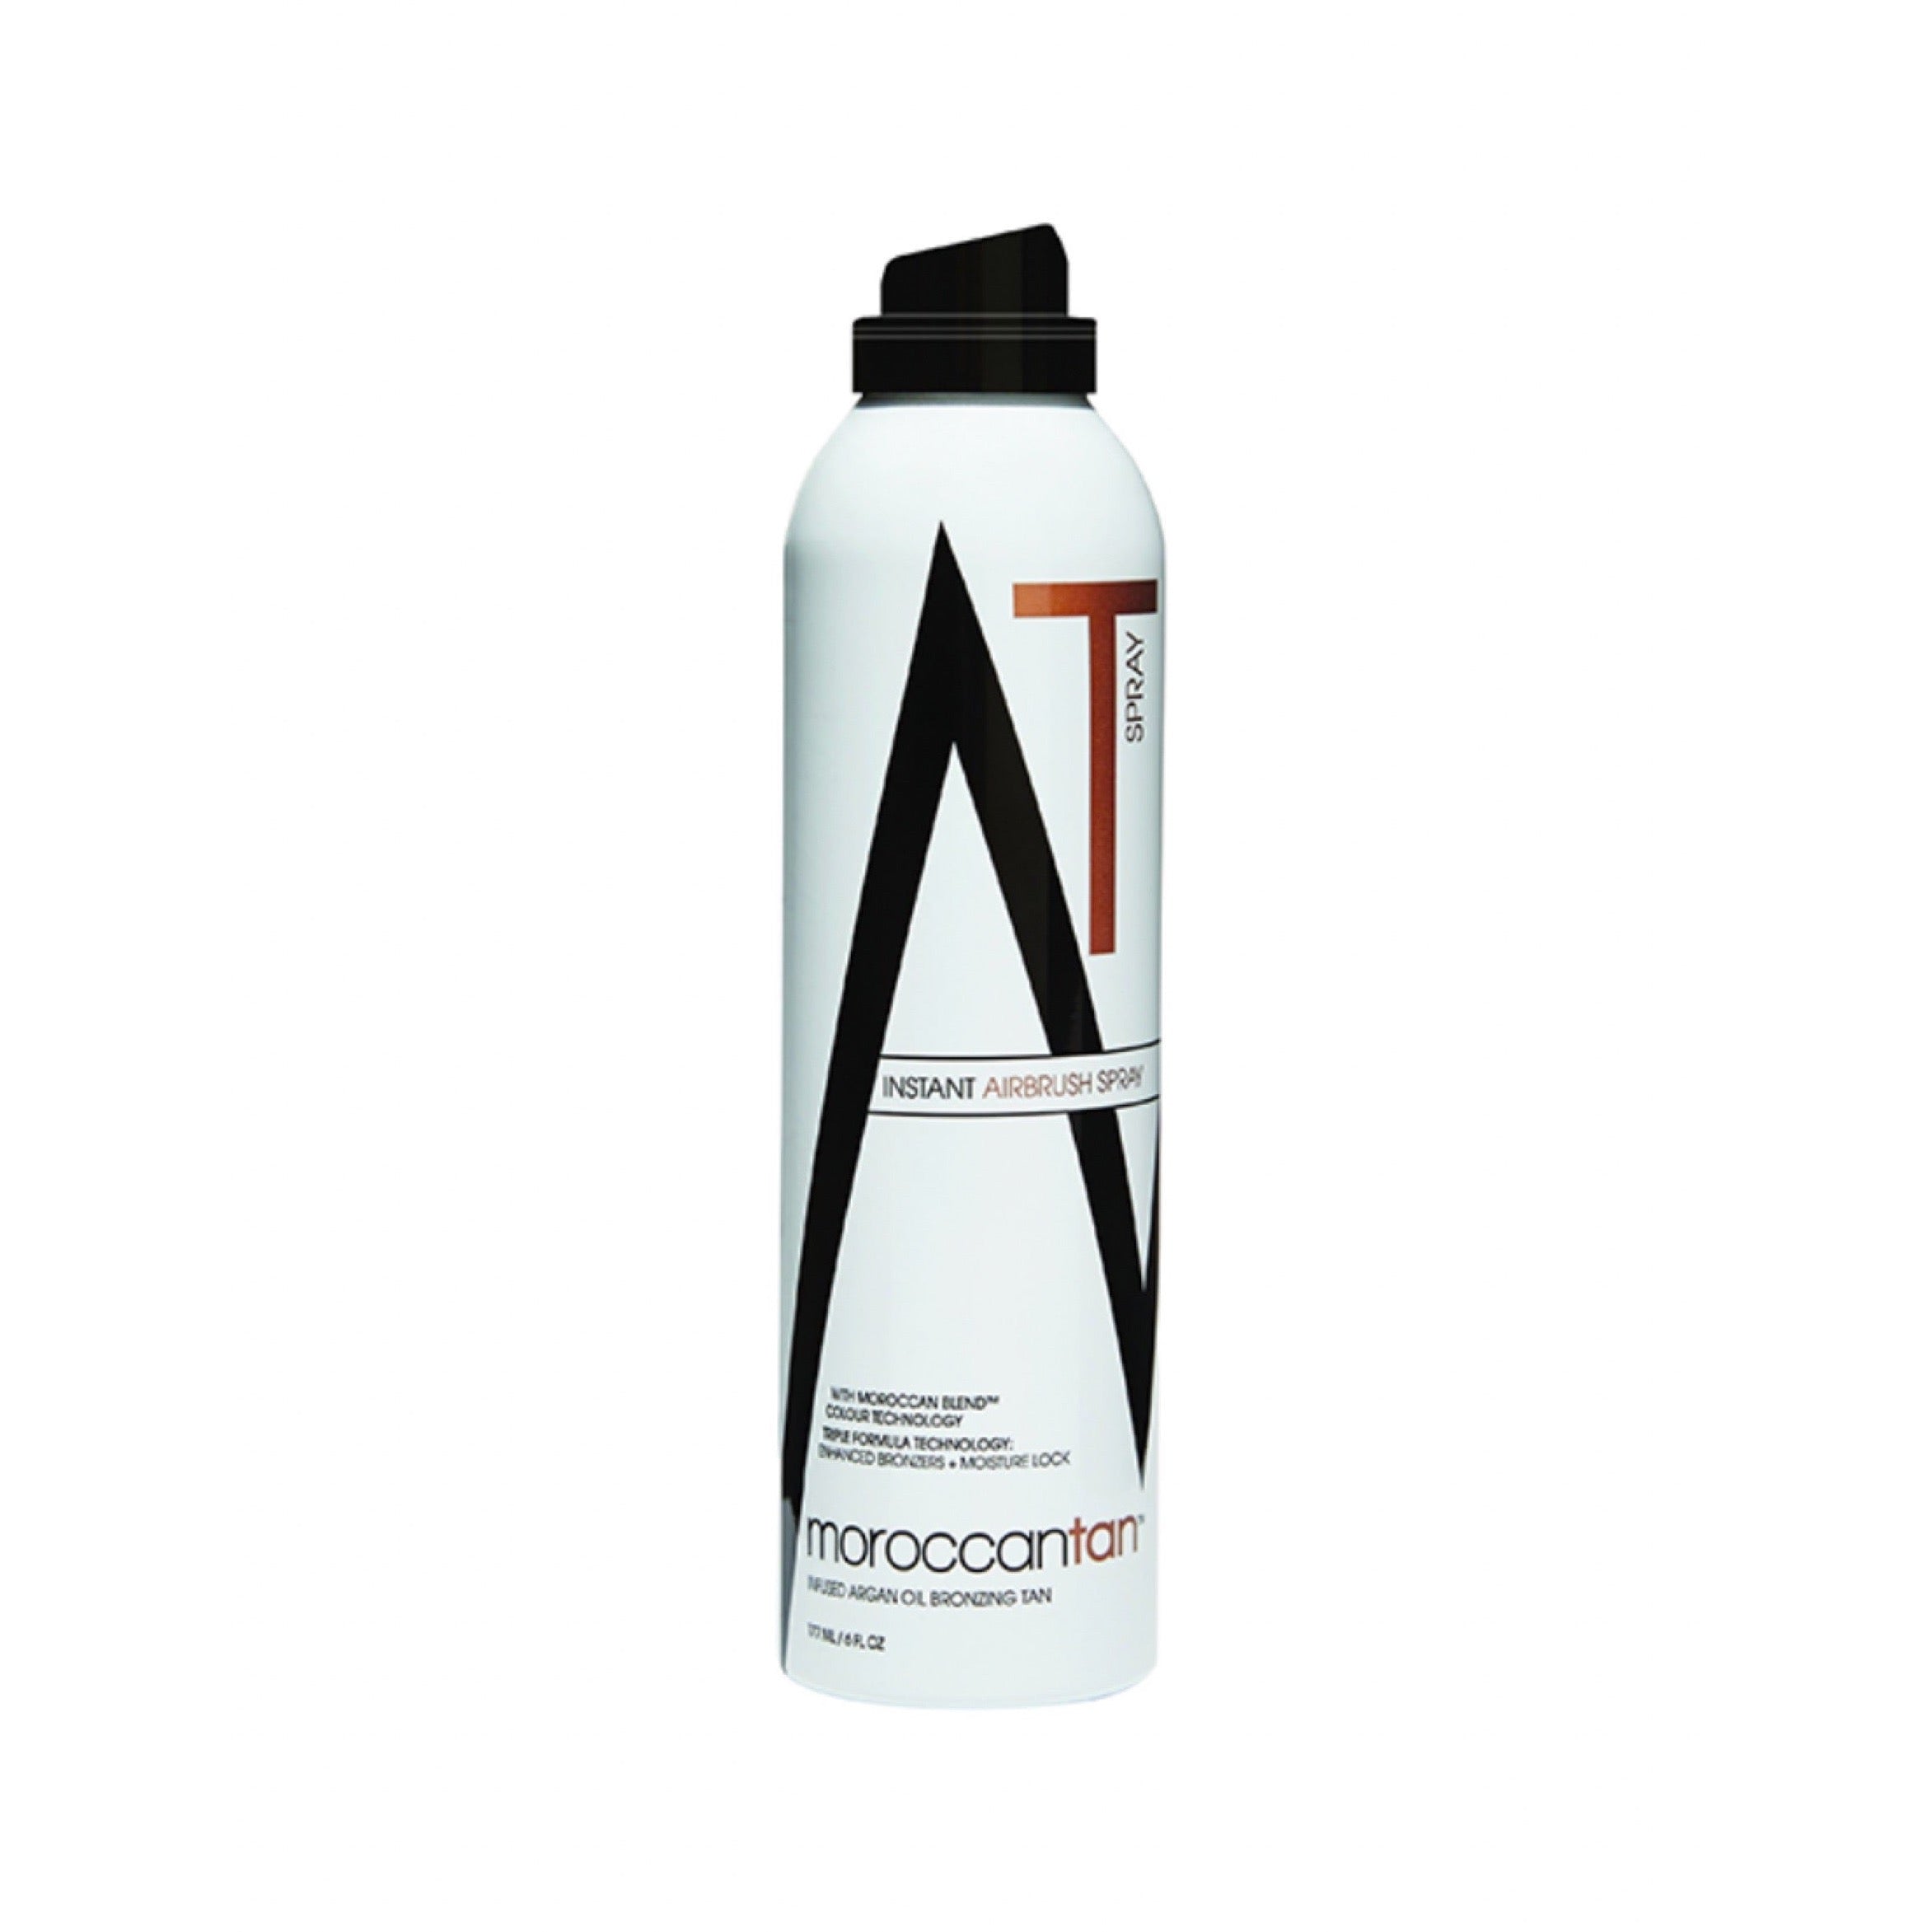 Airbrush Spray Tan